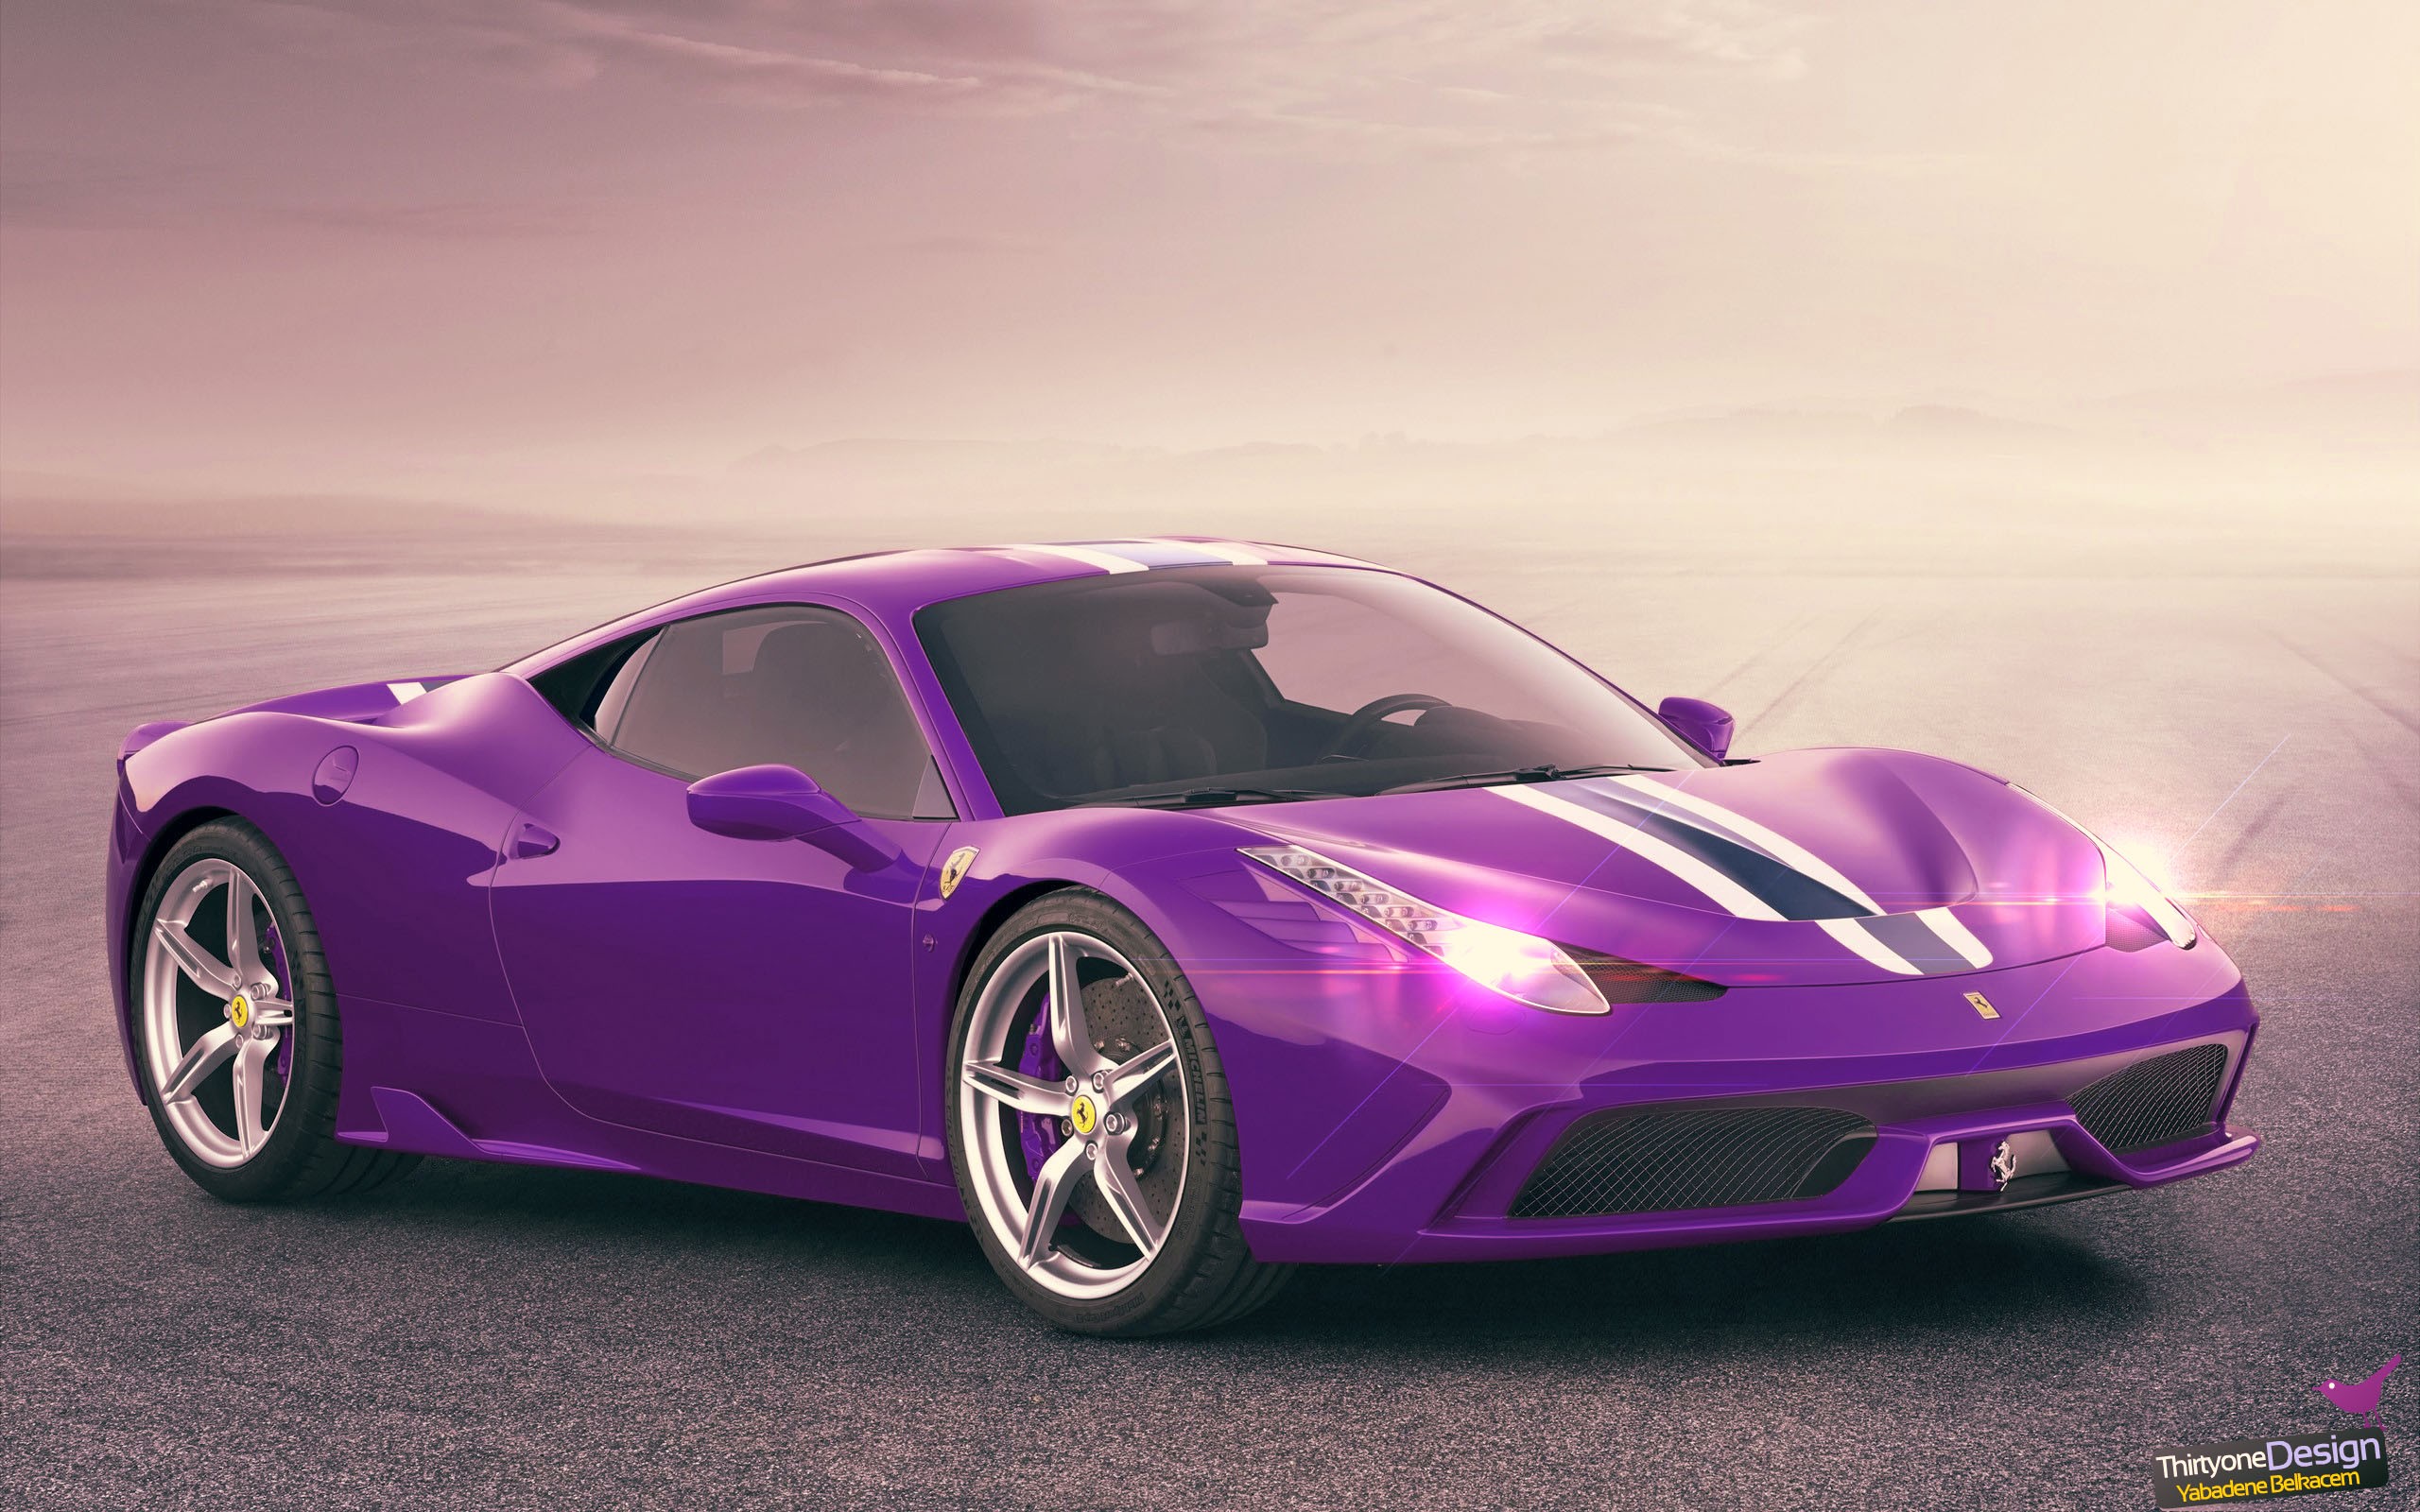 General 2560x1600 Ferrari digital art purple cars car vehicle